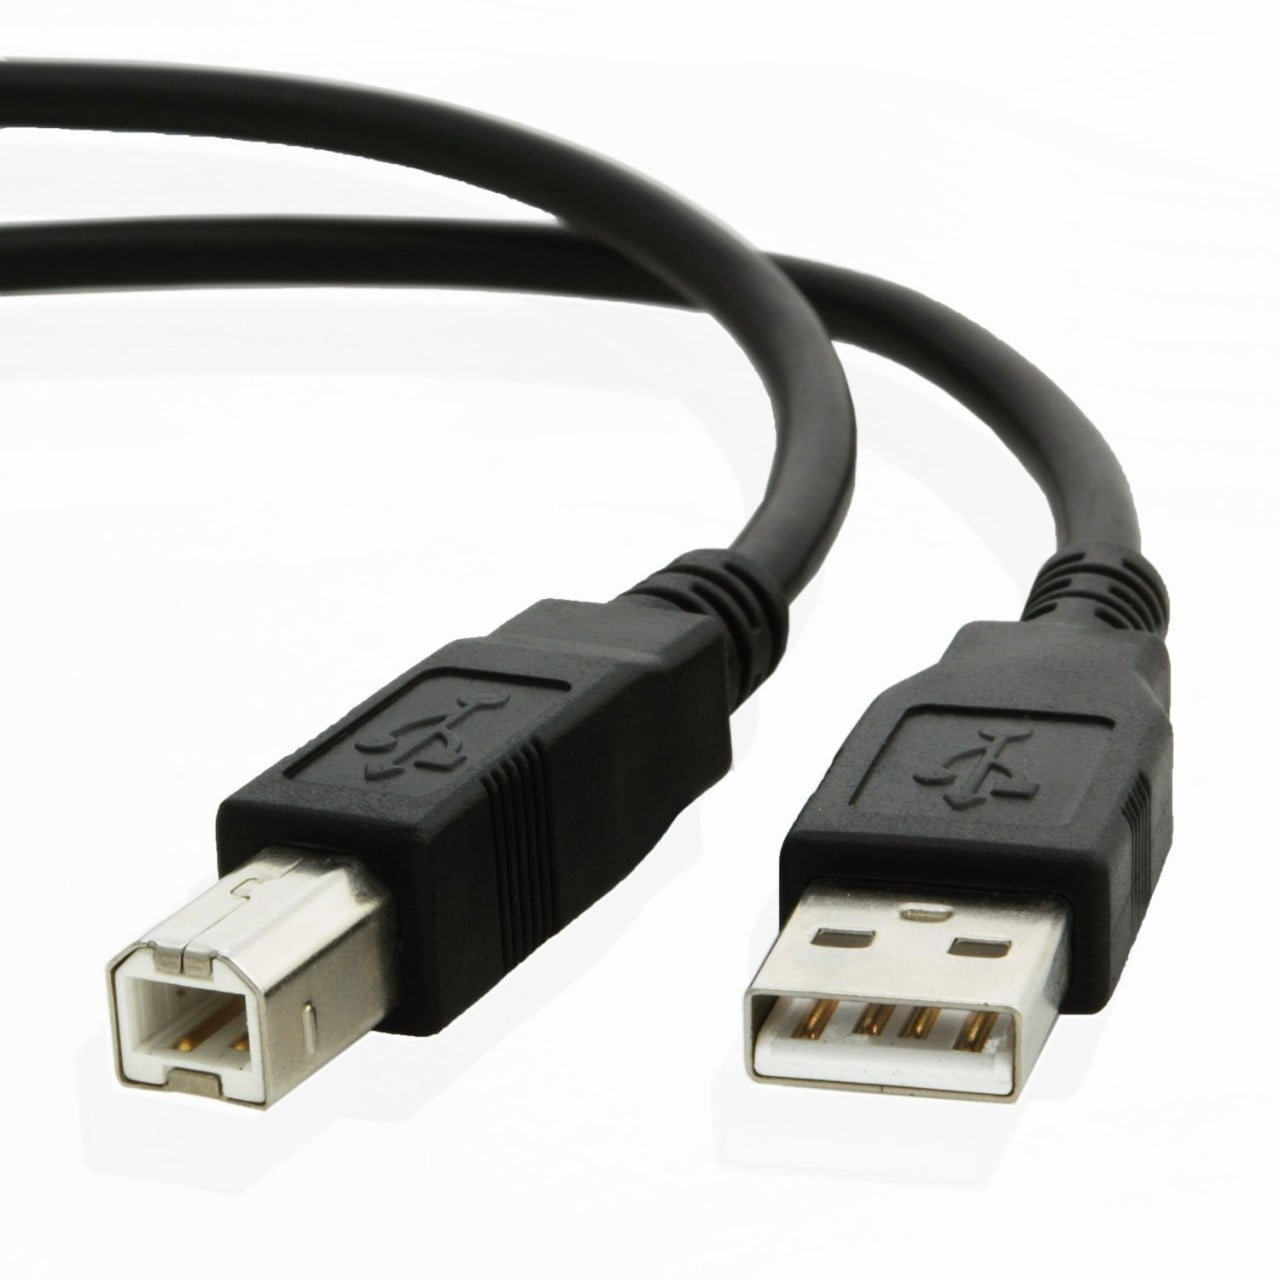 Cricut to PC USB Cable ORIGINAL Works Great 2 LENGTHS! ProvoCraft Cricut 